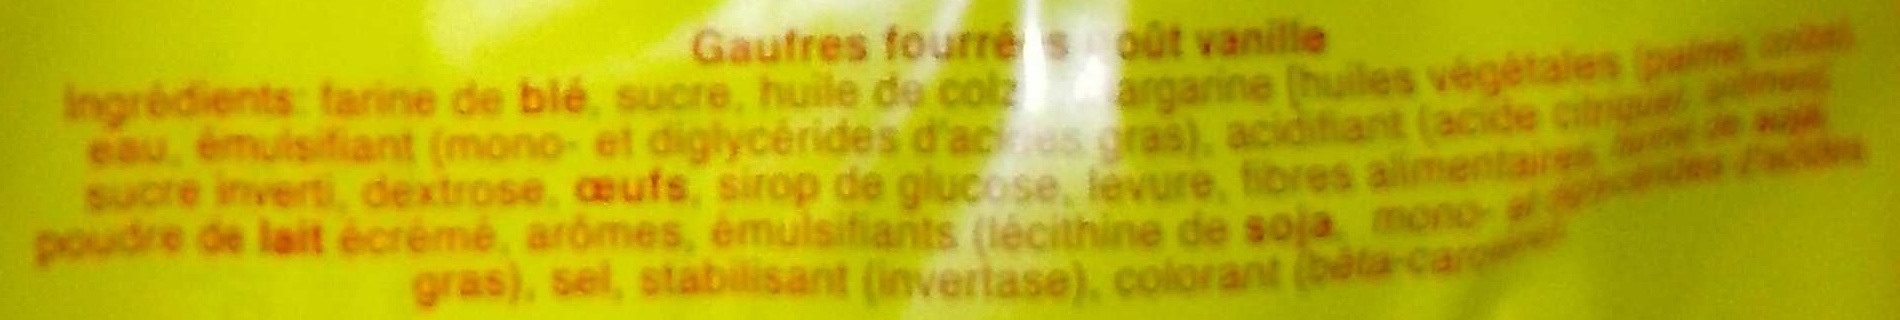 Gaufres Fourrées goût Vanille - Ingredients - fr